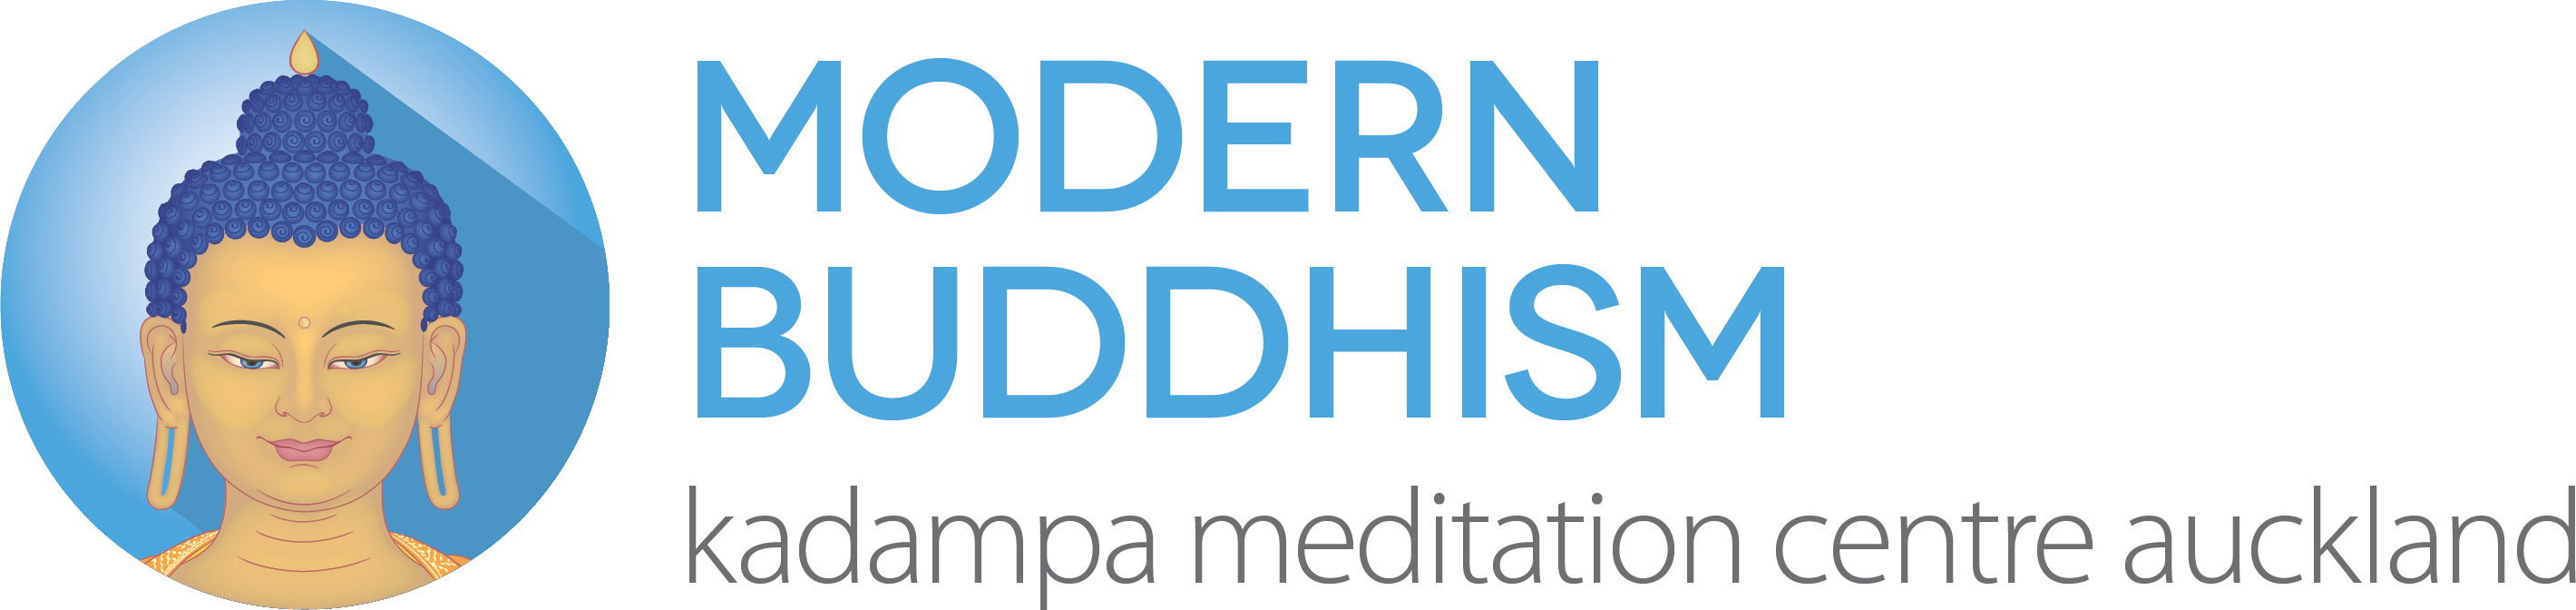 Compassion Kadampa Buddhist Centre 